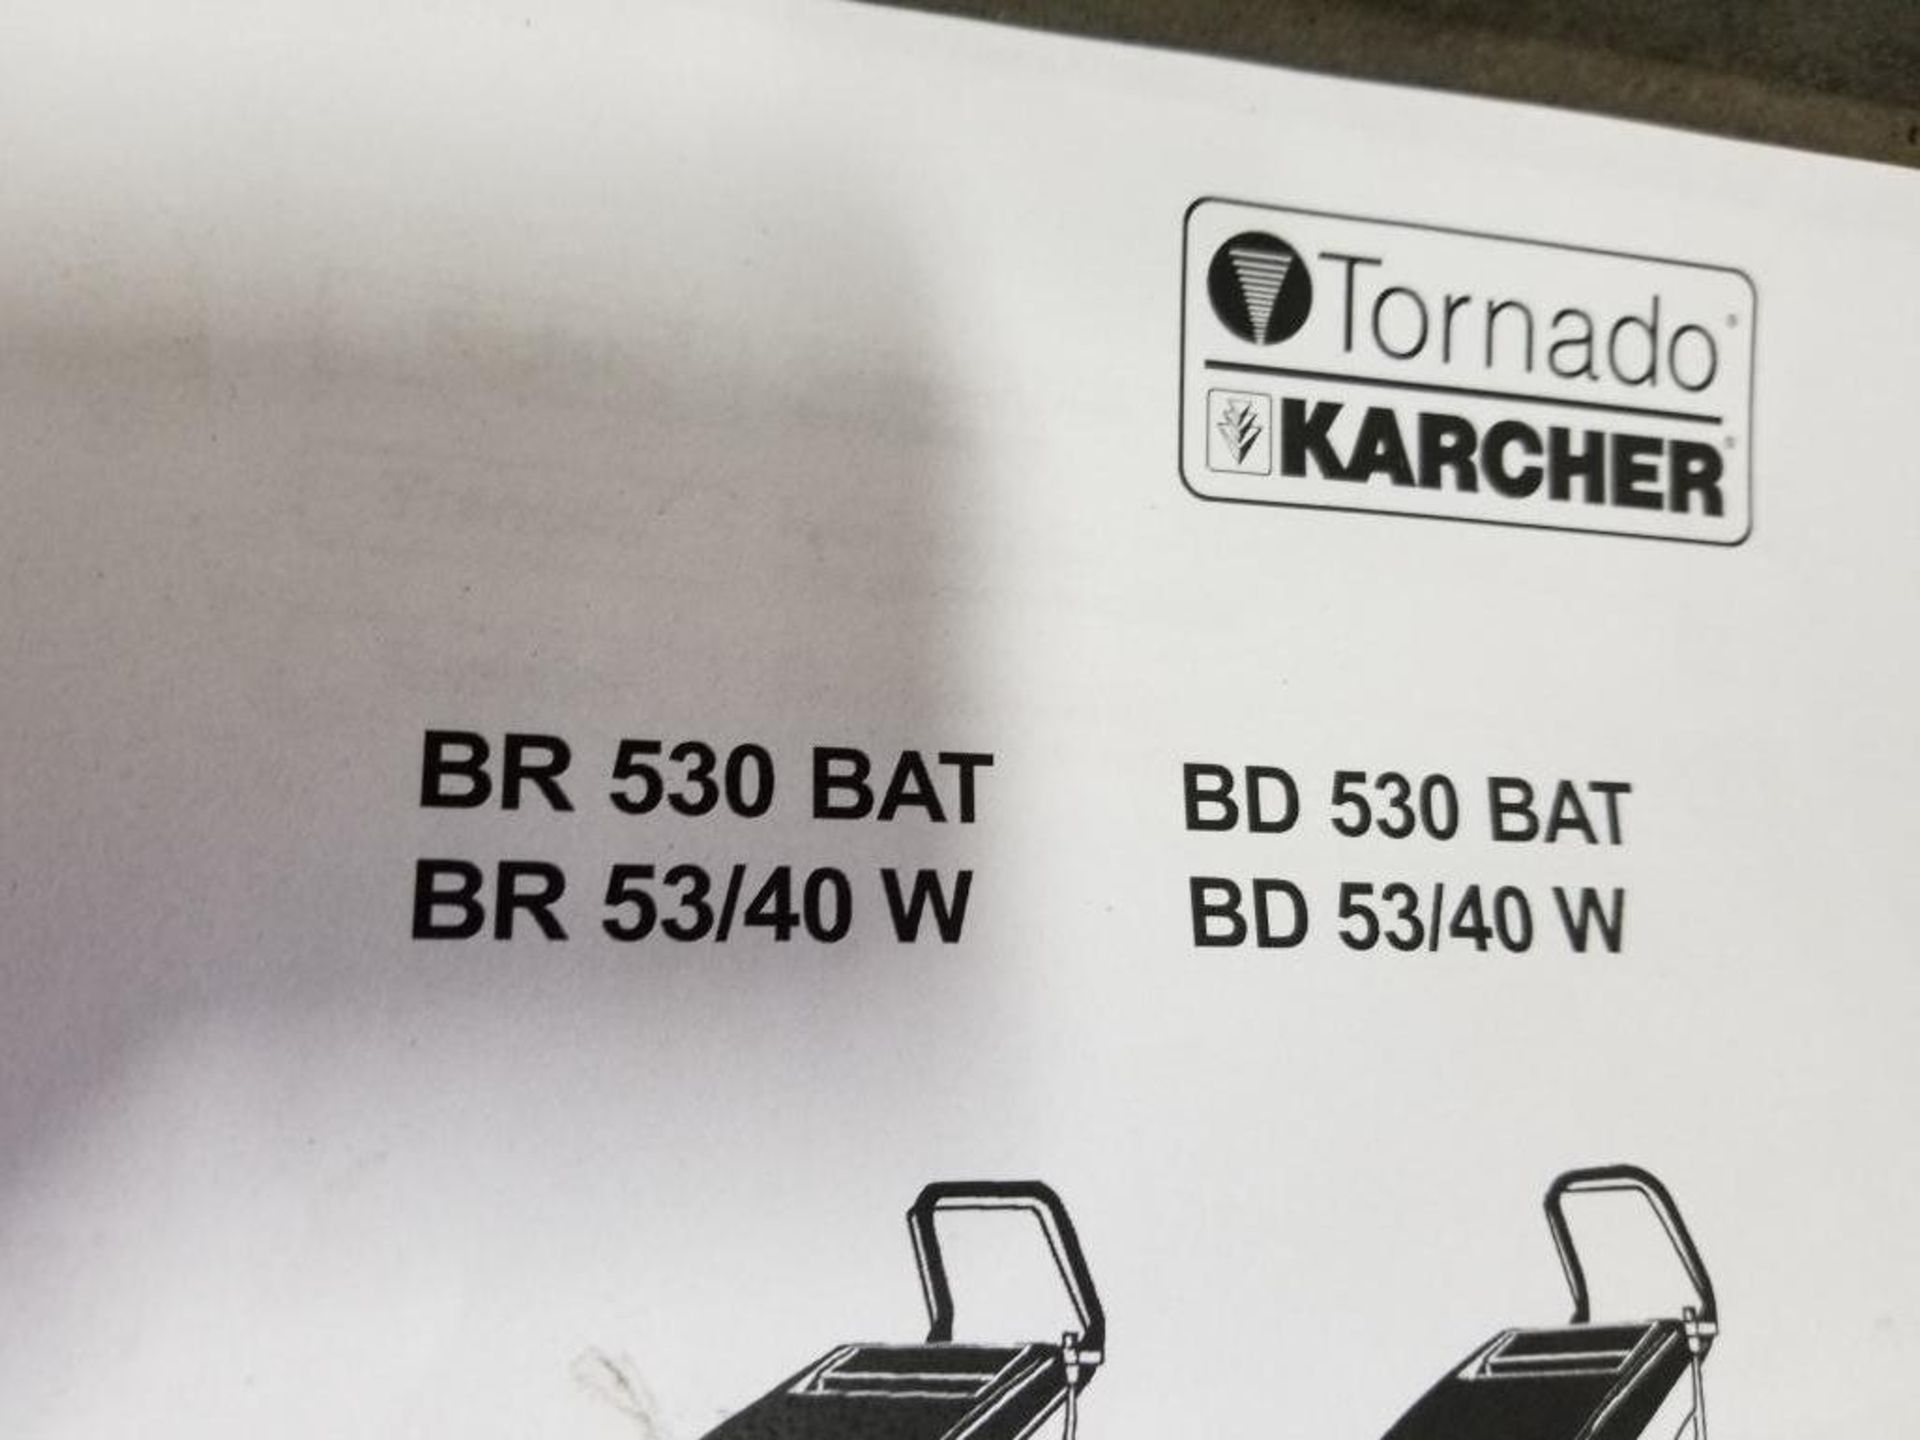 Karcher Tornado floor scrubber. Parts repairable. - Image 5 of 8